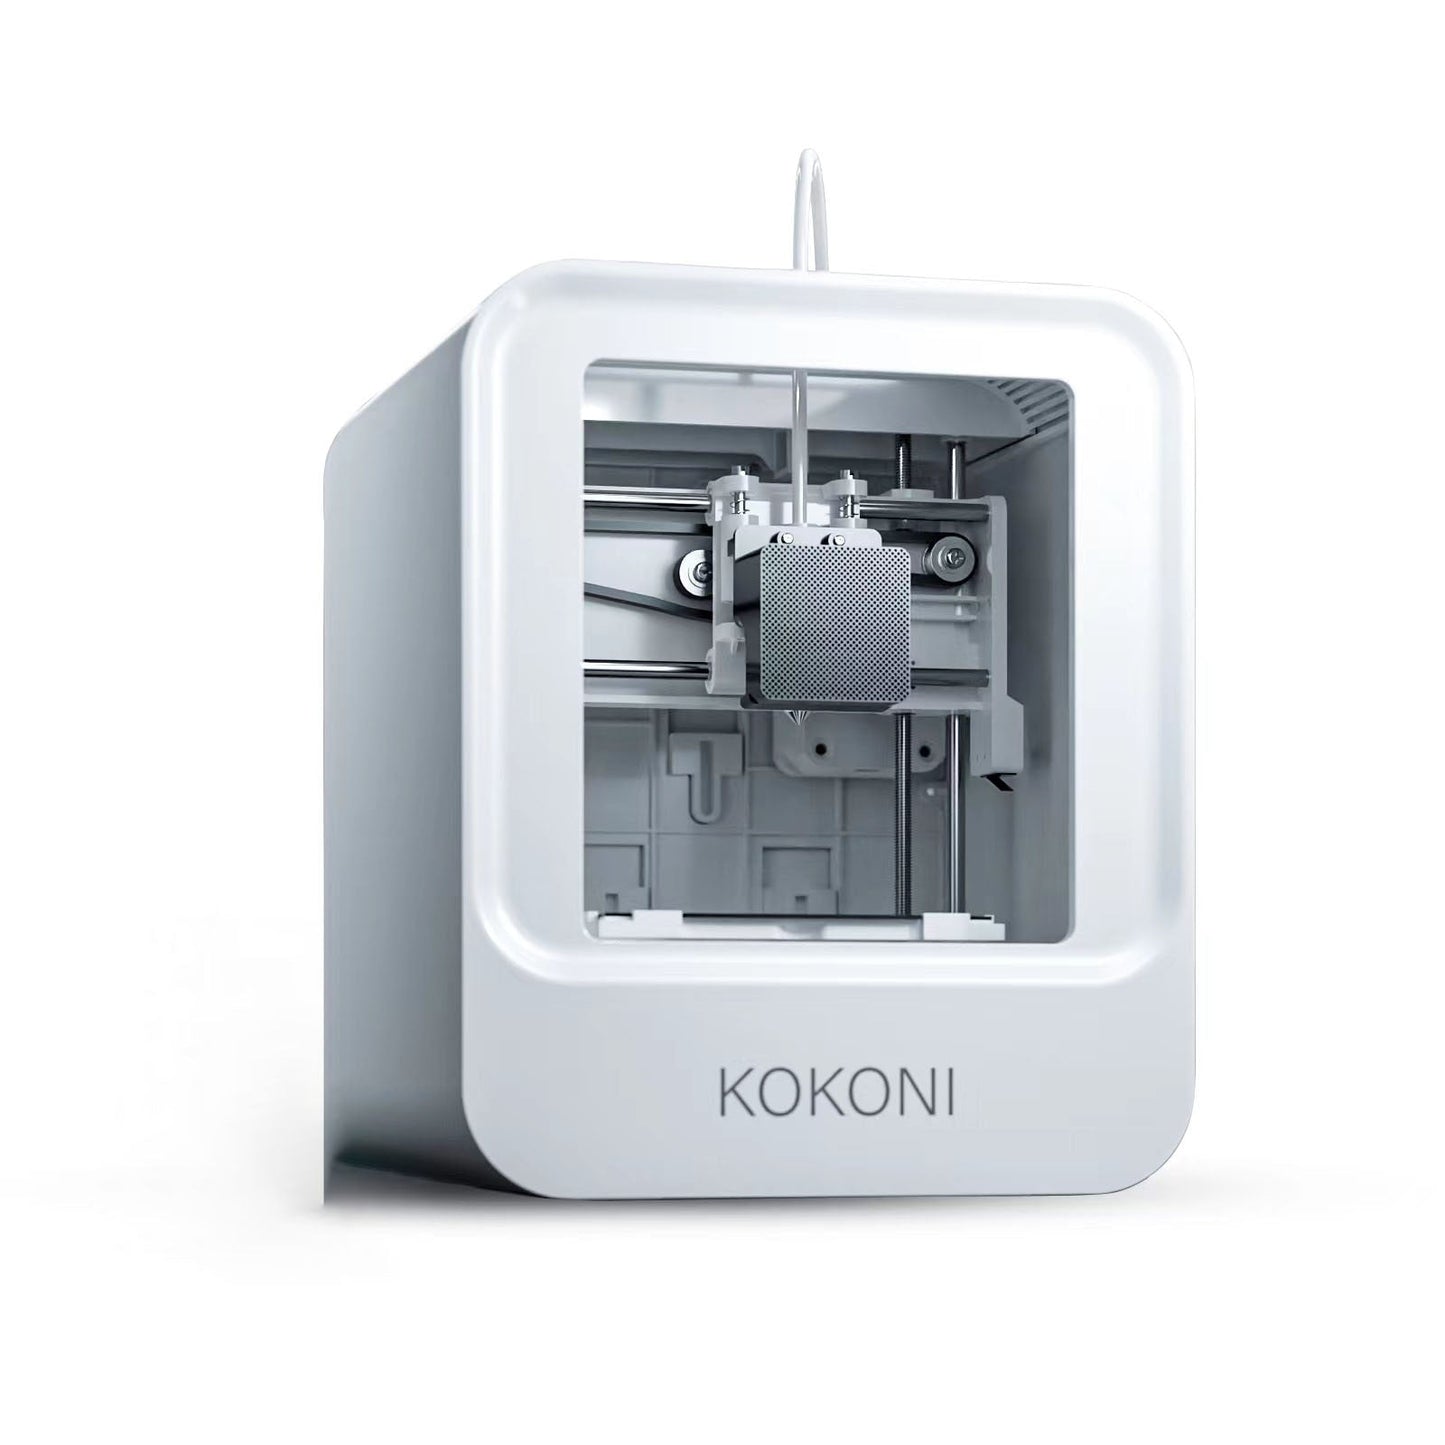 Newest KOKONI 3D Printer Mini Home High Precision Industrial Desktop-level 3D Printer App Smart Control Photo Model